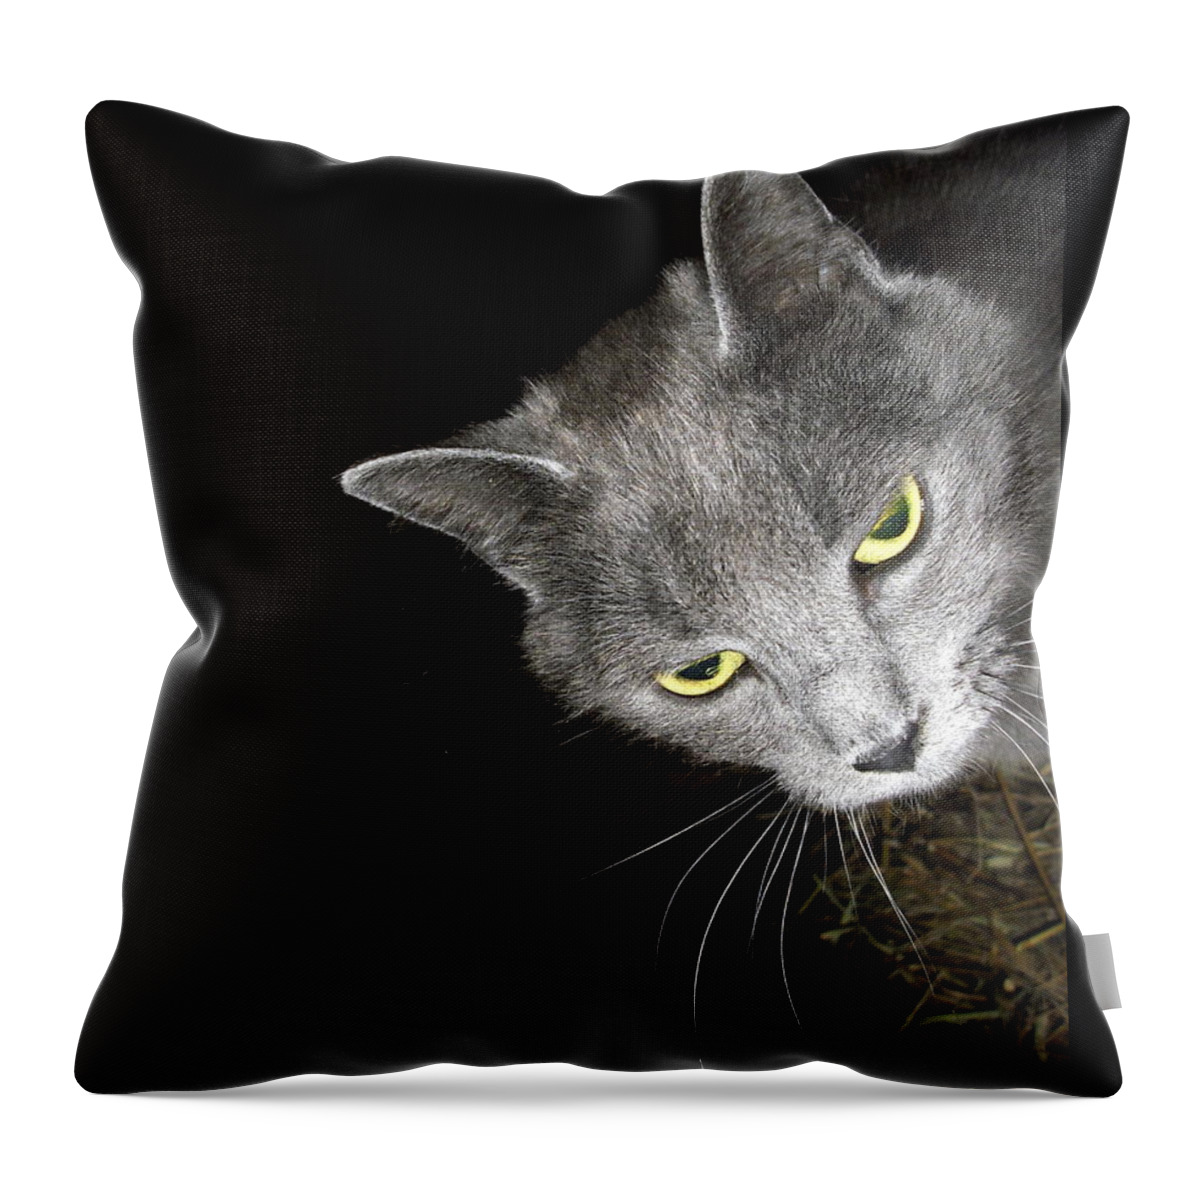 Cat Throw Pillow featuring the photograph Golden Eyes by Jodie Marie Anne Richardson Traugott     aka jm-ART